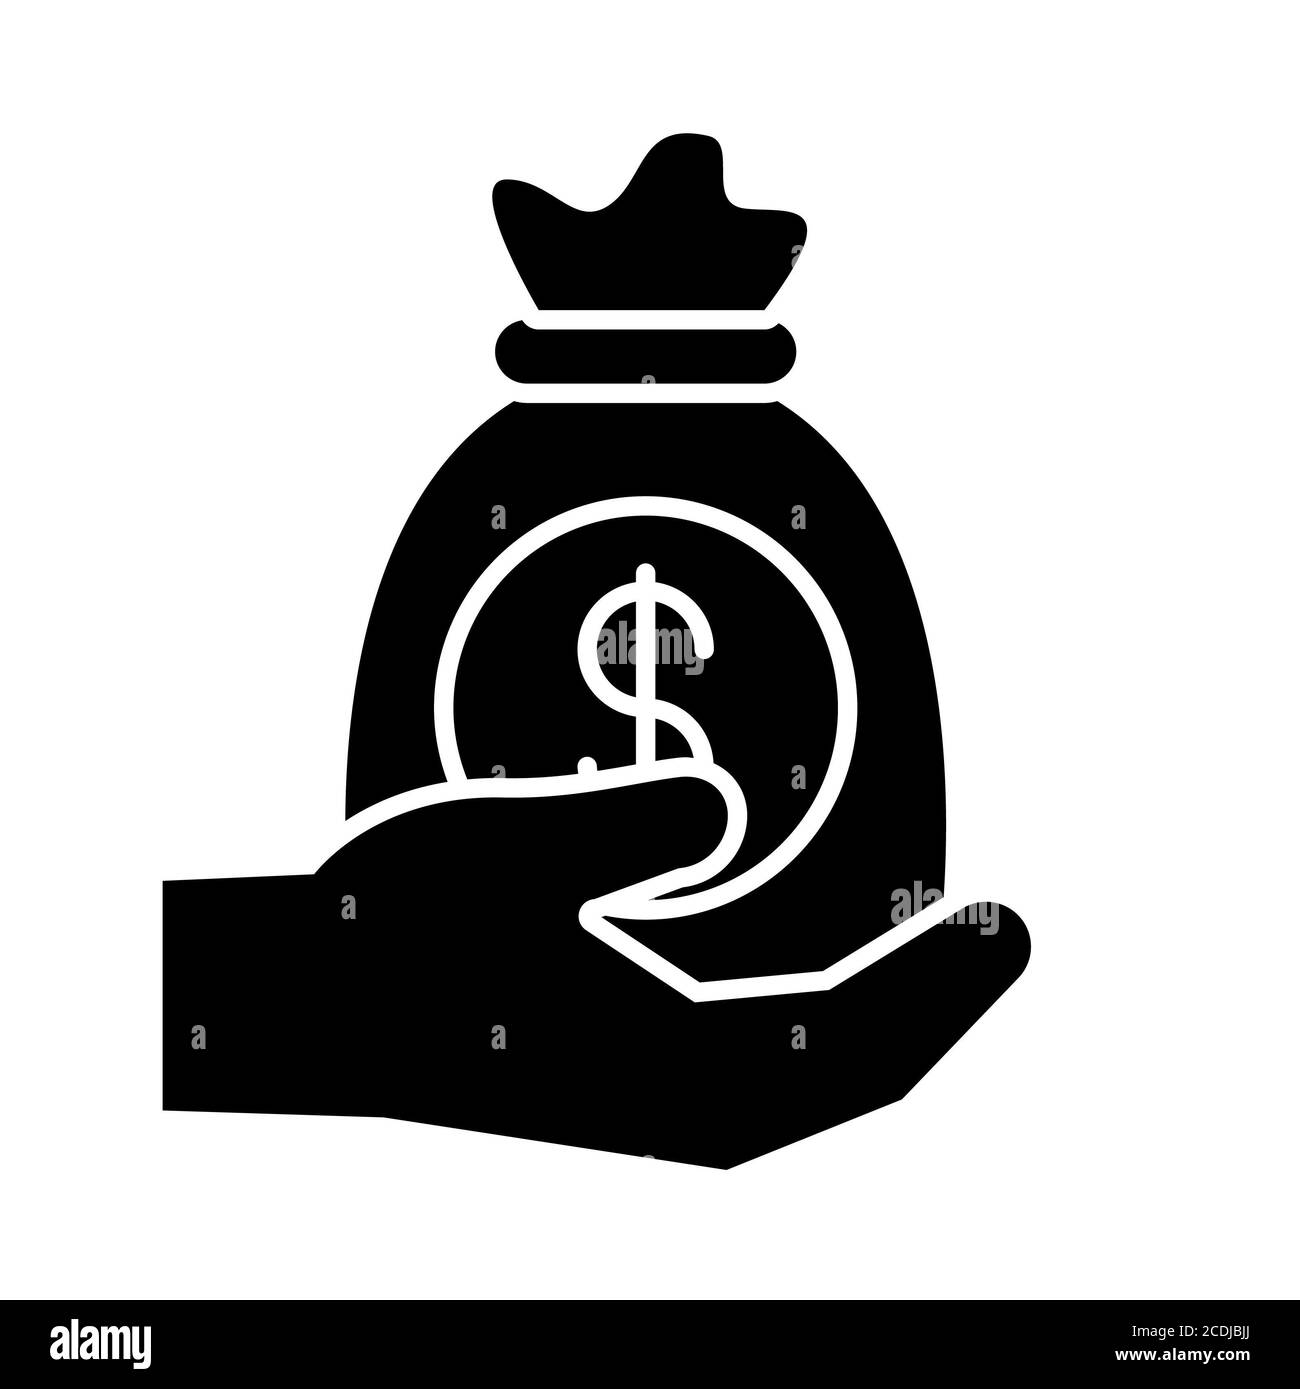 Money bag silhouettes / Money bags vector illustrations